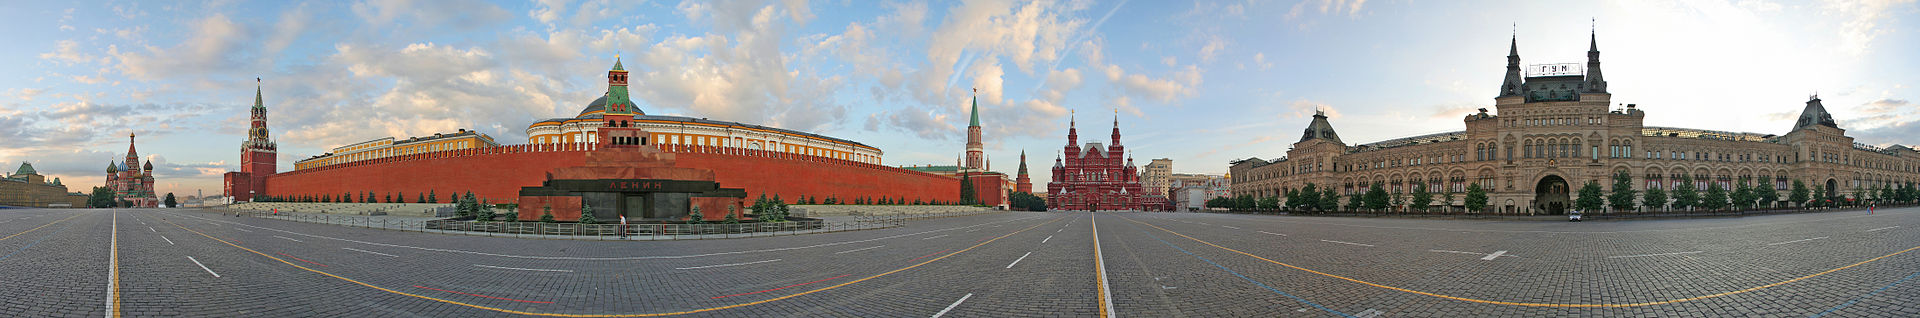 Panorama 360 Red Square edit